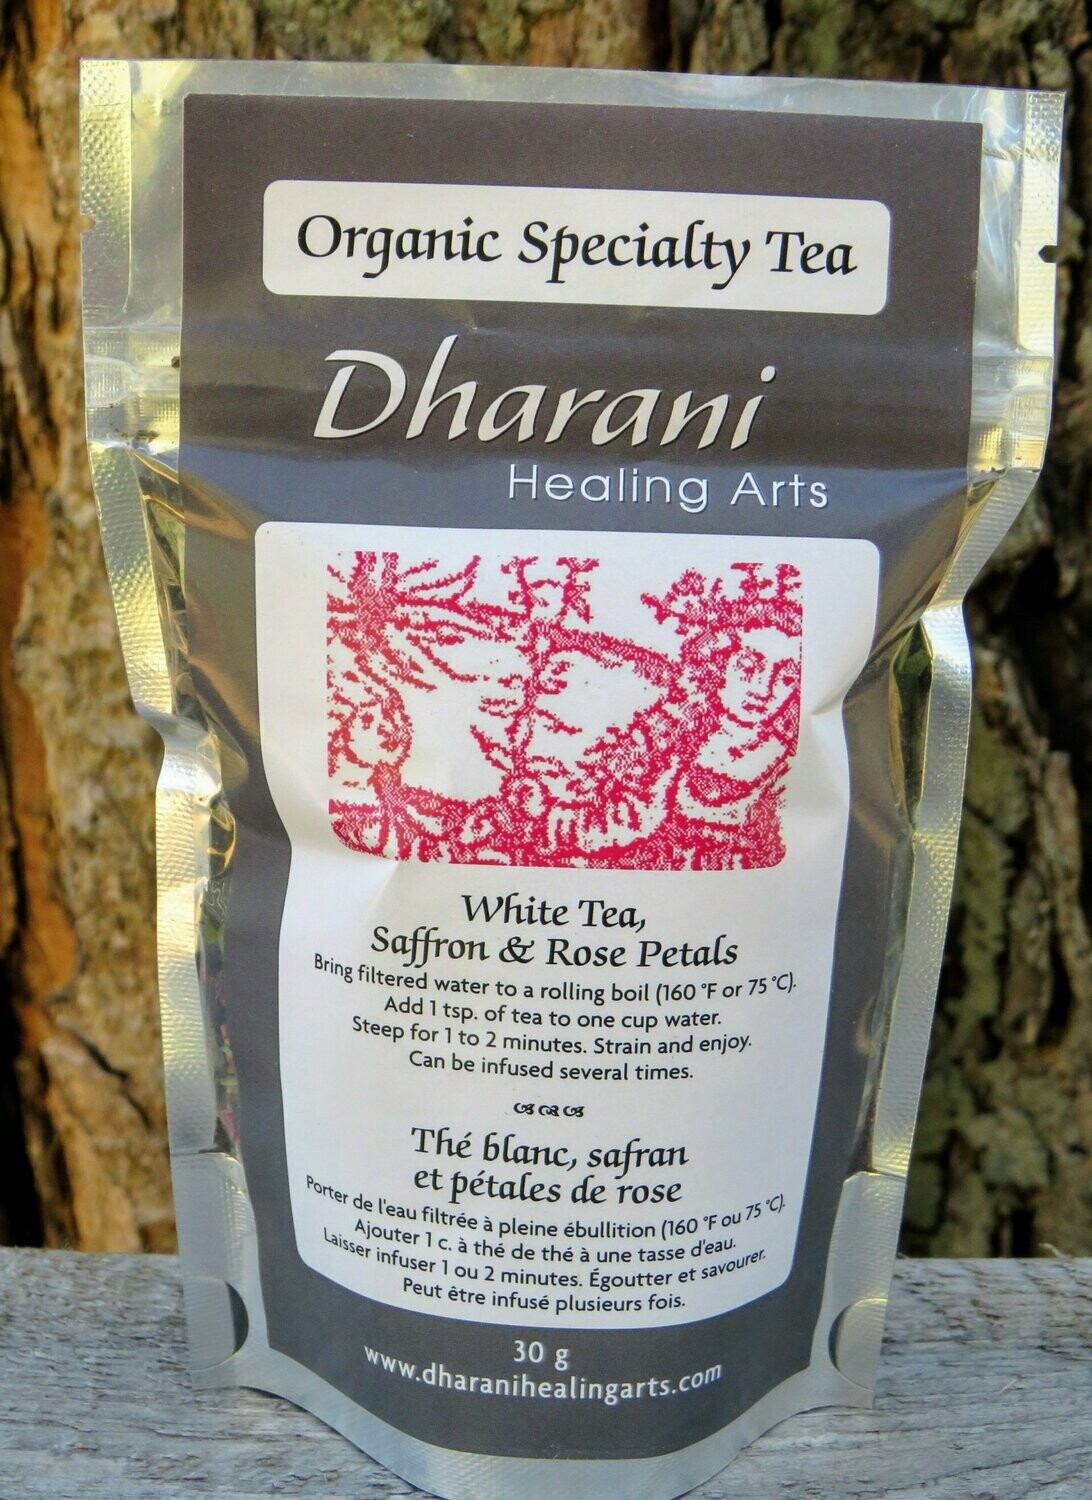 White tea with Saffron and Rose Petals​